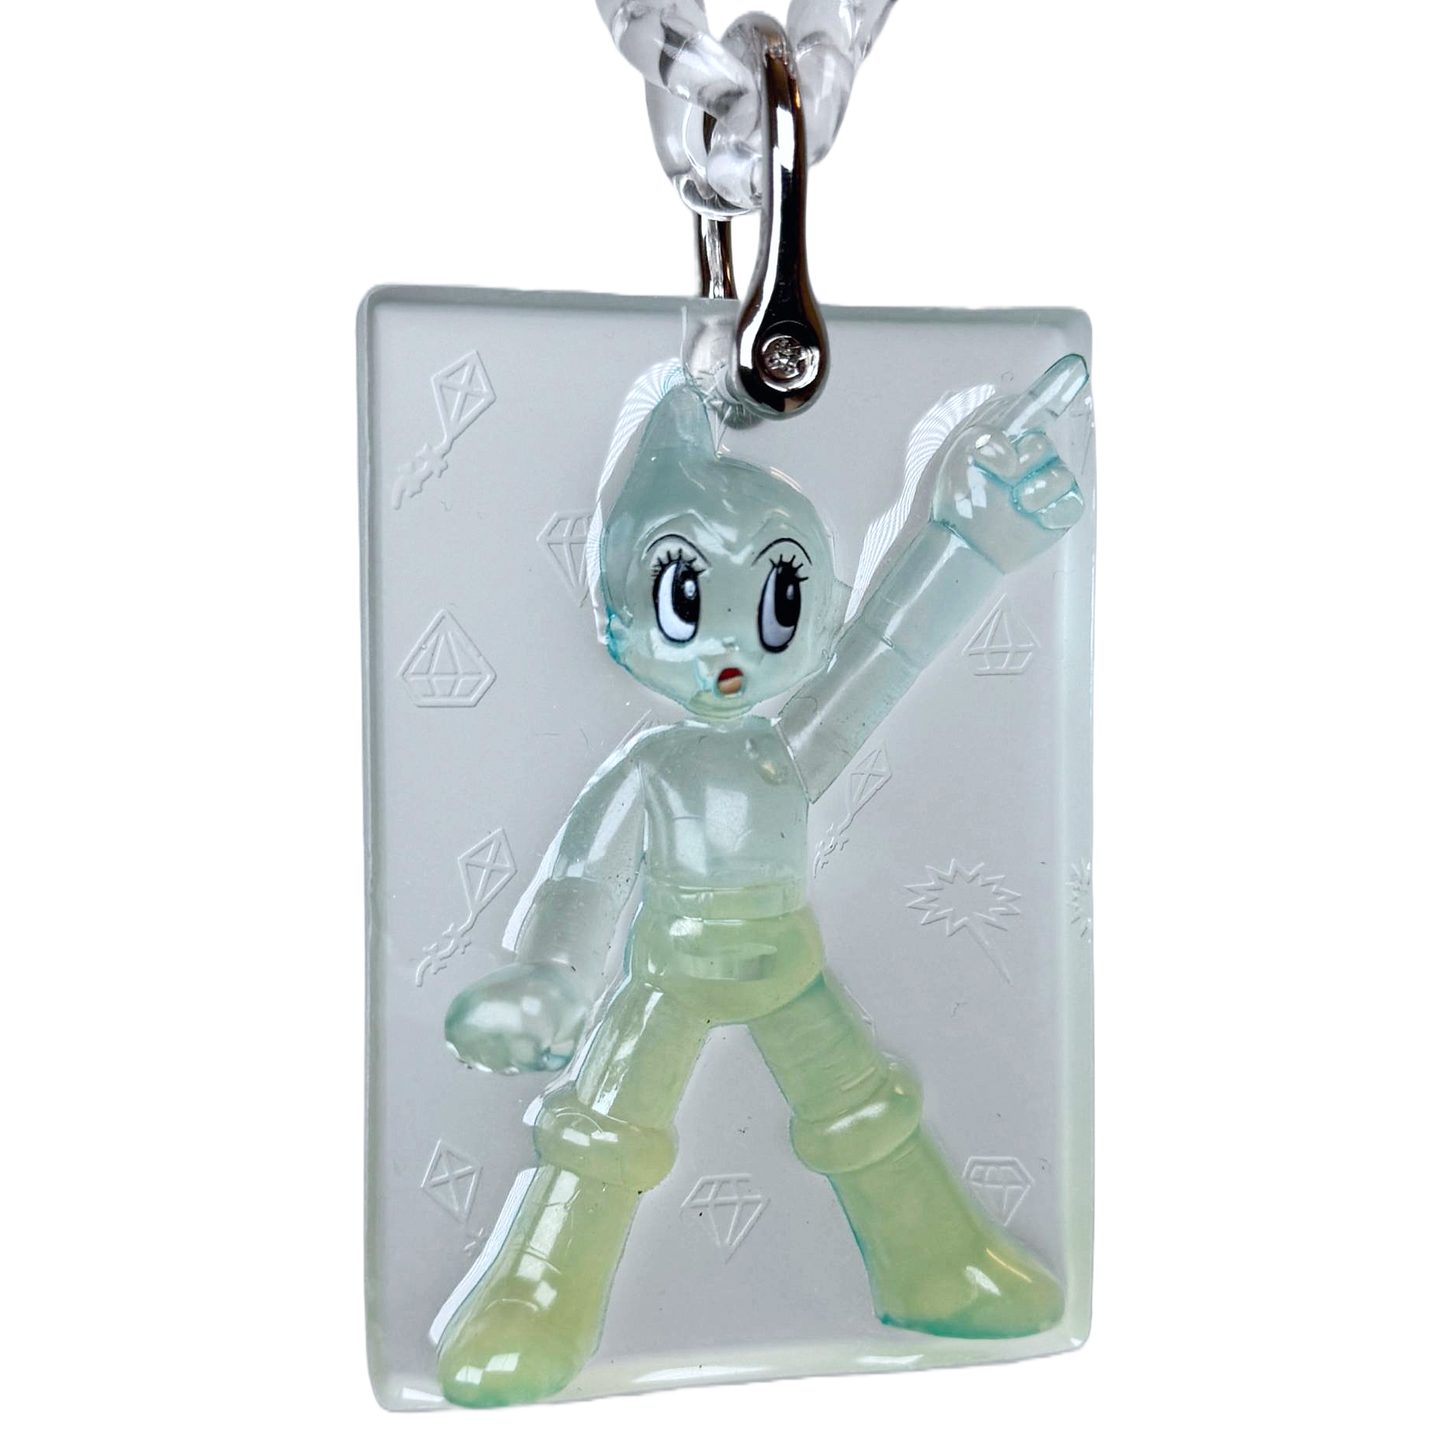 Astro Boy Jelly Green Pendant